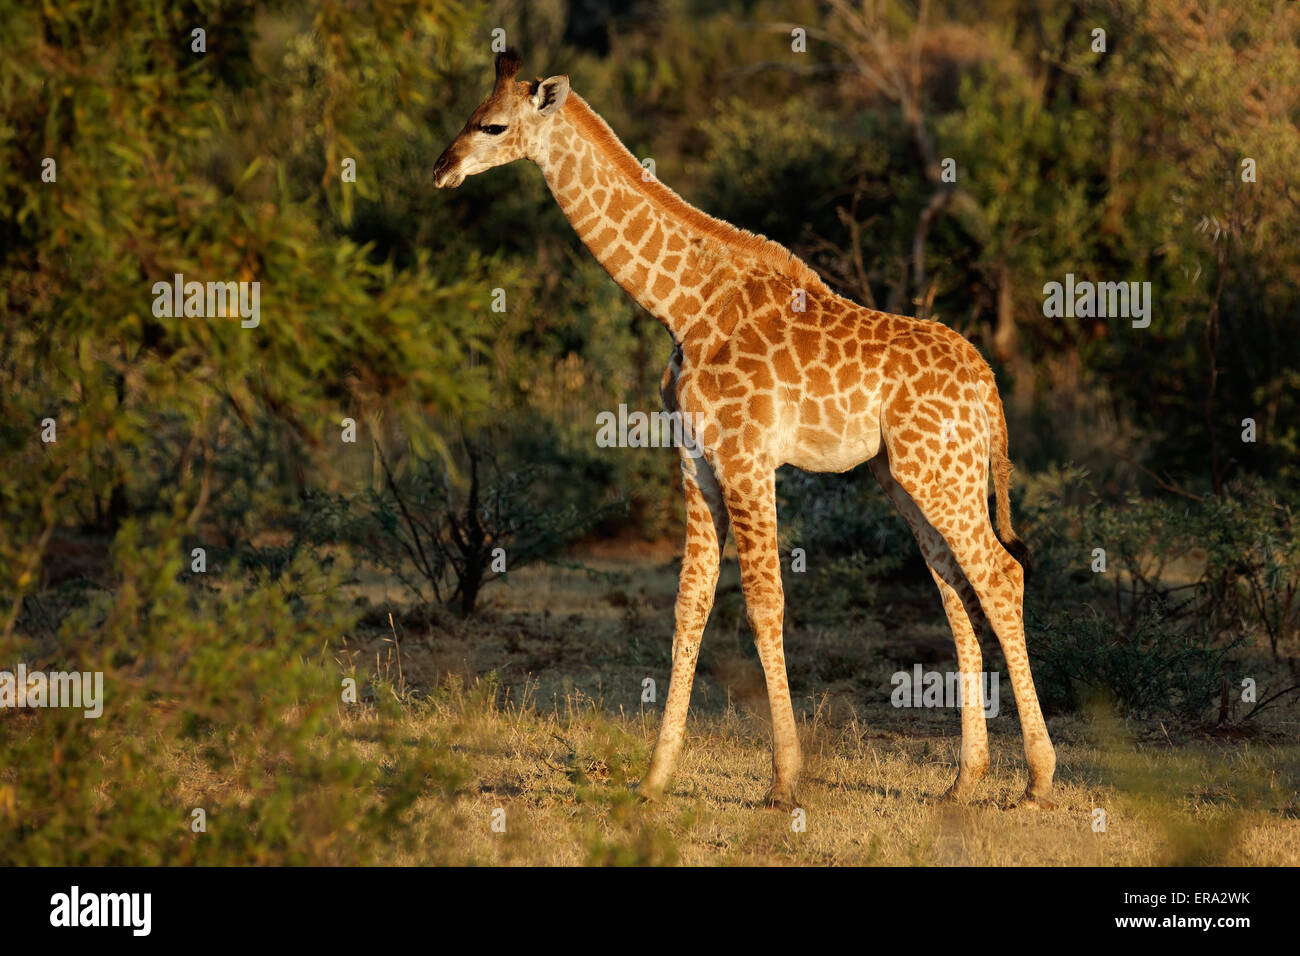 Un petit bébé Girafe (Giraffa camelopardalis) dans l'habitat naturel, l'Afrique du Sud Banque D'Images